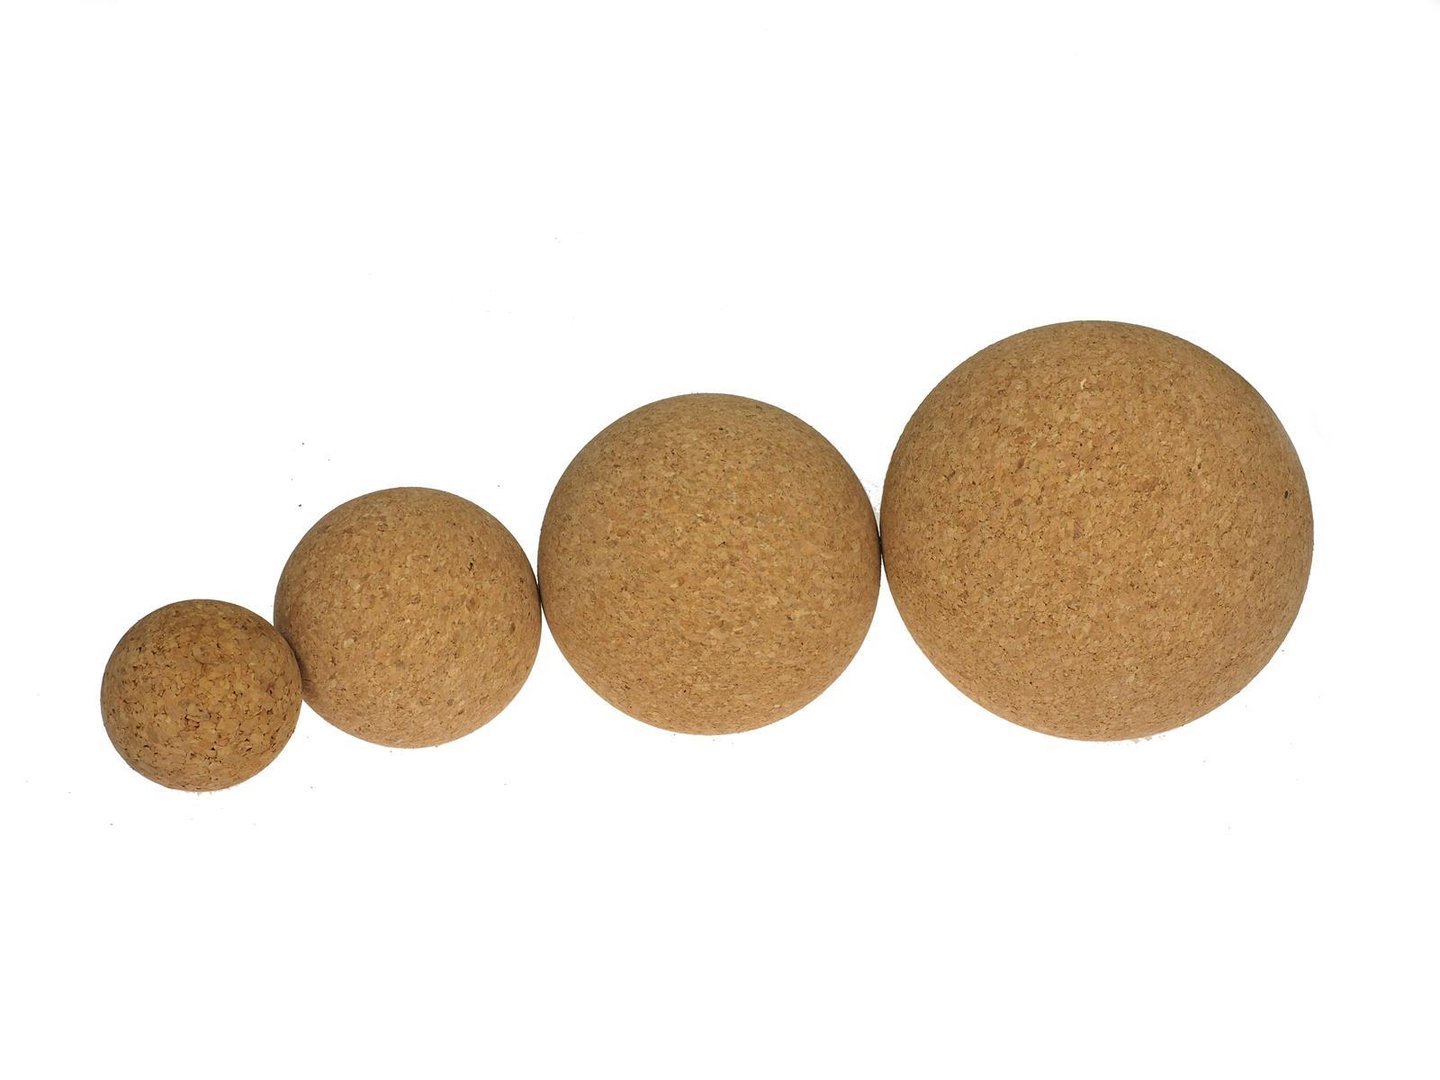 7390 Pressed cork balls